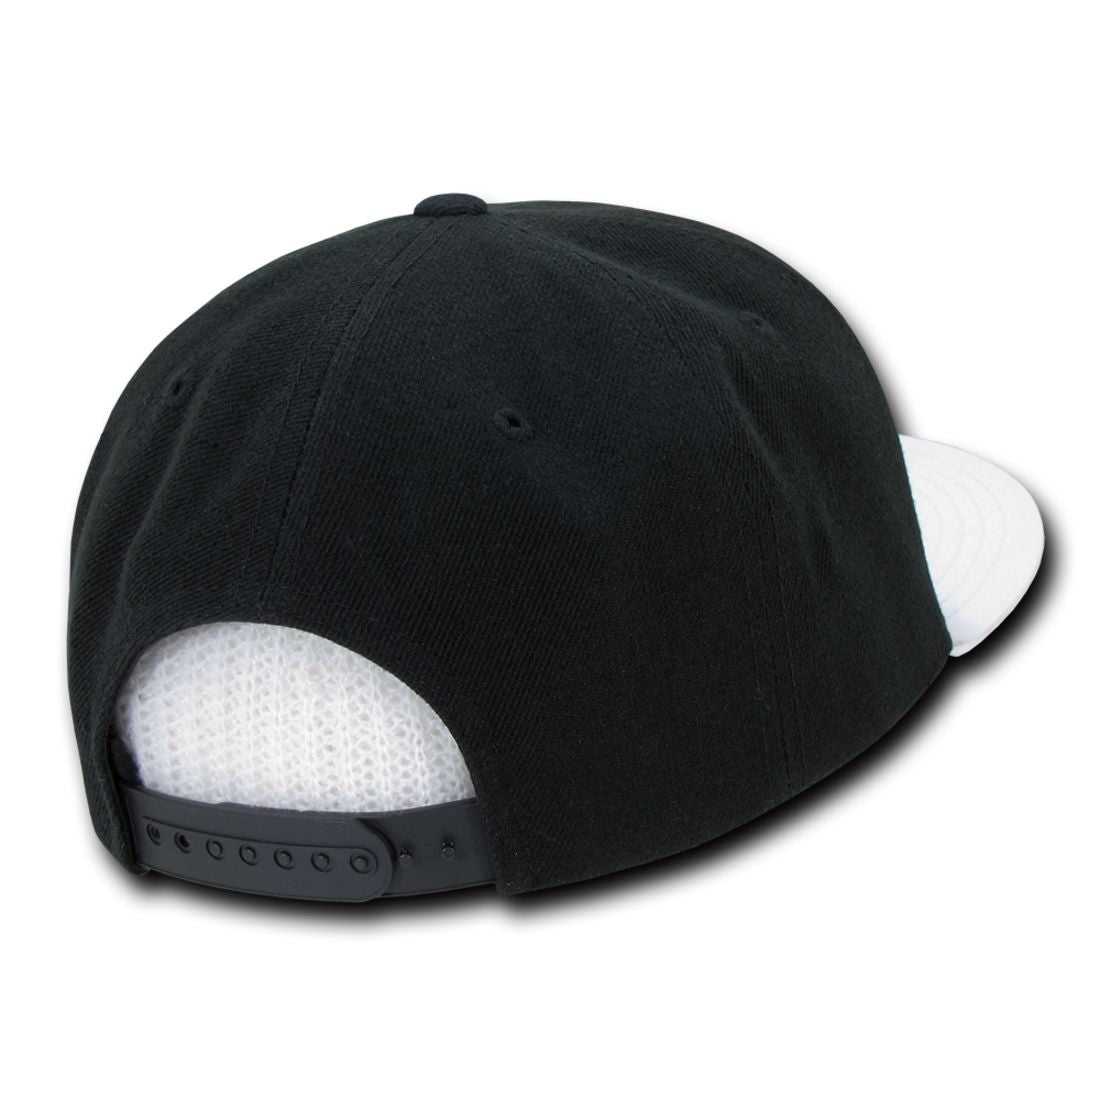 Decky 1046 High Profile Two Tone Brim Snapback Hats 6 Panel Caps Flat Bill Wholesale